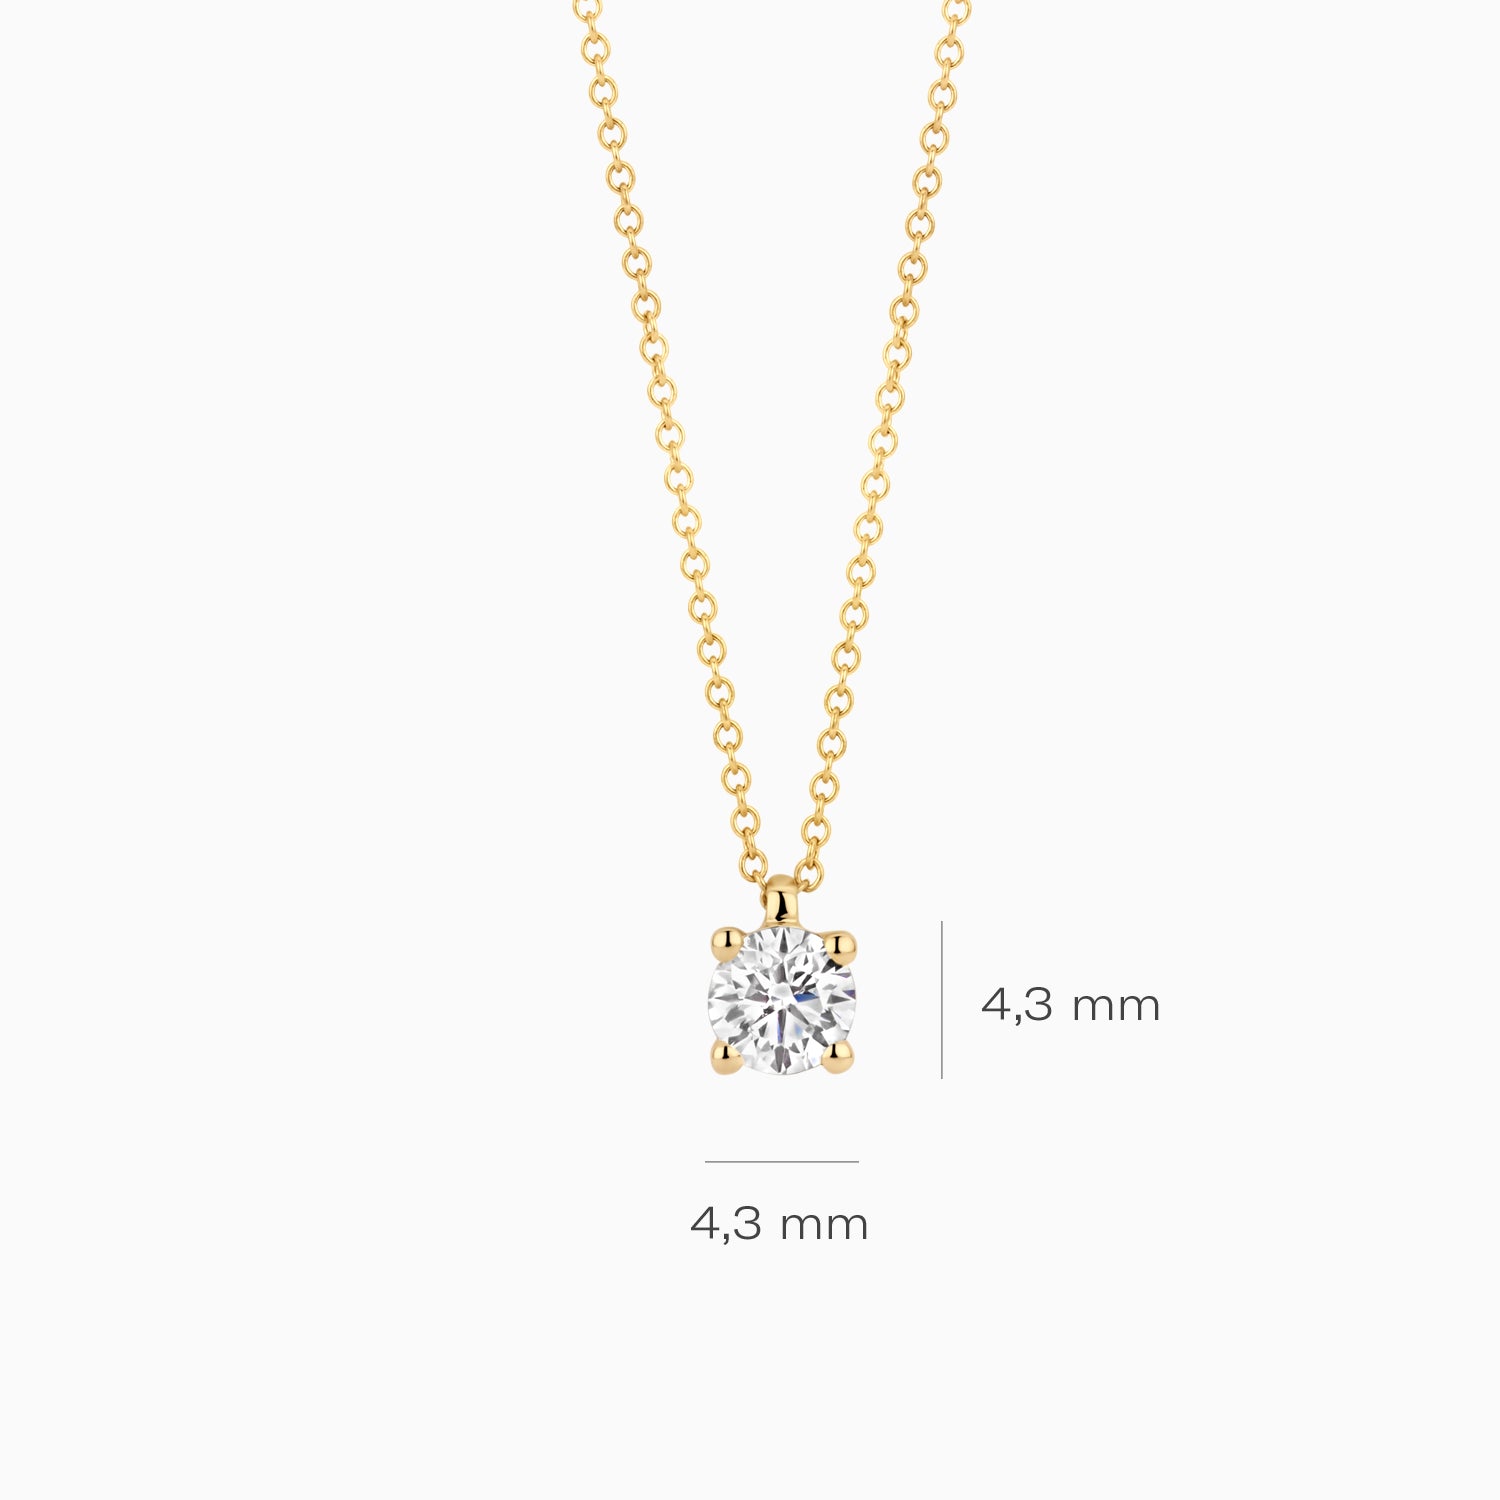 Lab diamonds necklace LG3002Y - 14k Yellow gold